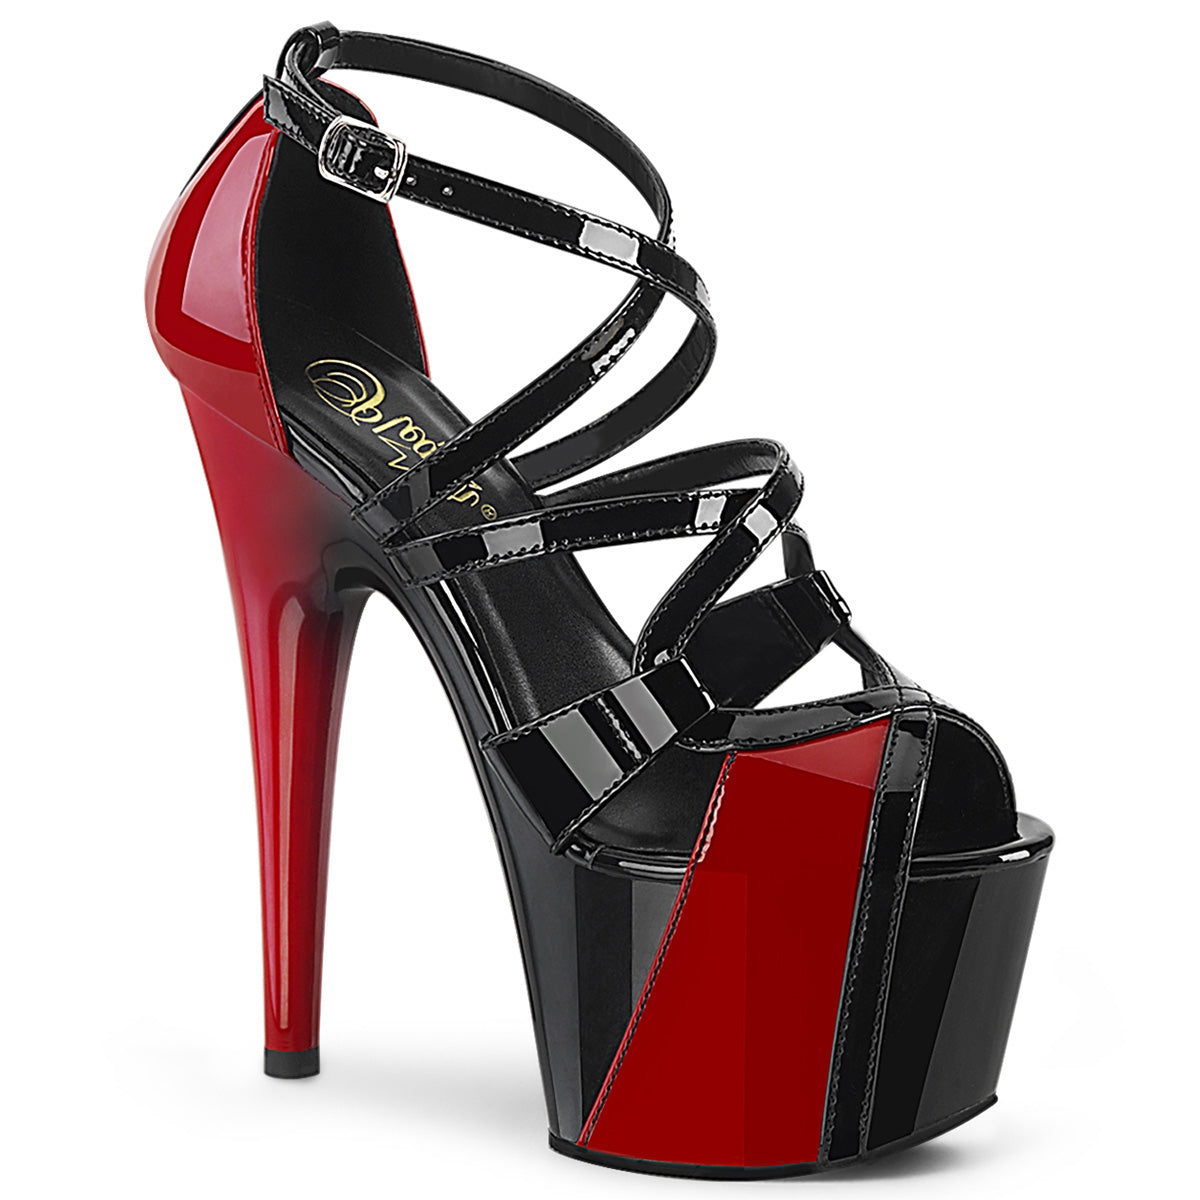 ADORE-764 Black & Red Ankle Sandal High Heel